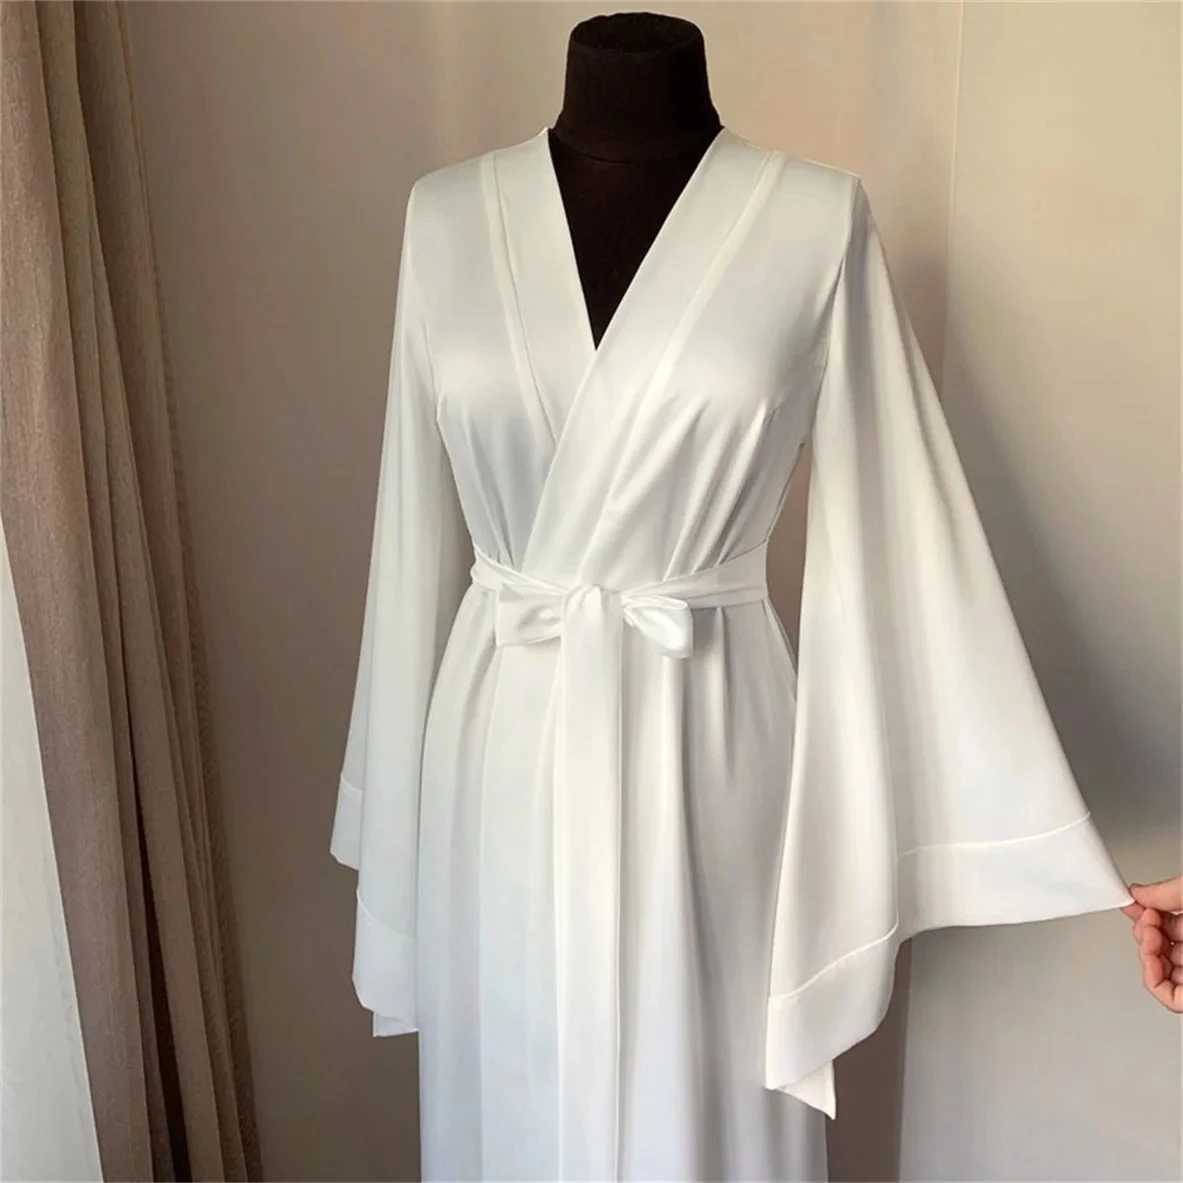 ZV51 Women's Sleep Lounge White Soft Silk Bridal Robe with Belt Long Sleeve Dressing Gown Wedding Bathrobes Women Boudoir Sleepwear Nightgowns d240419